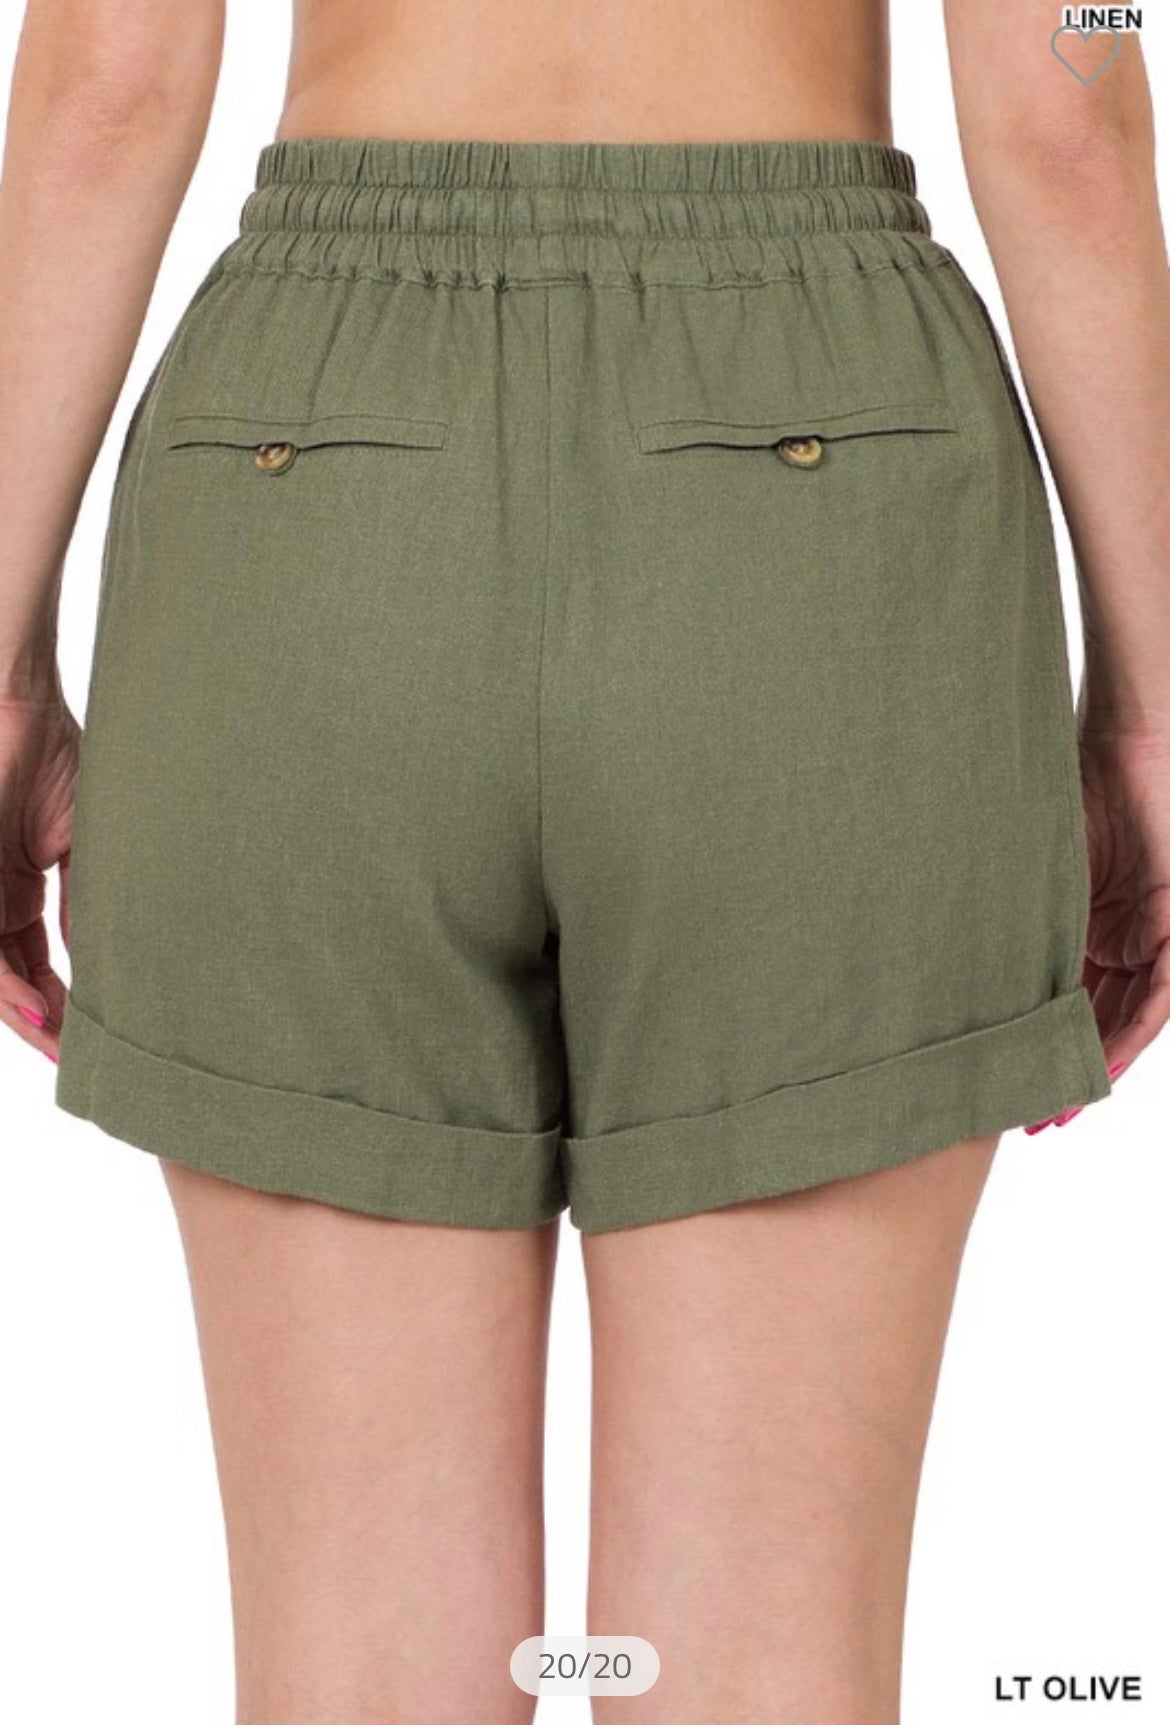 Tori linen shorts